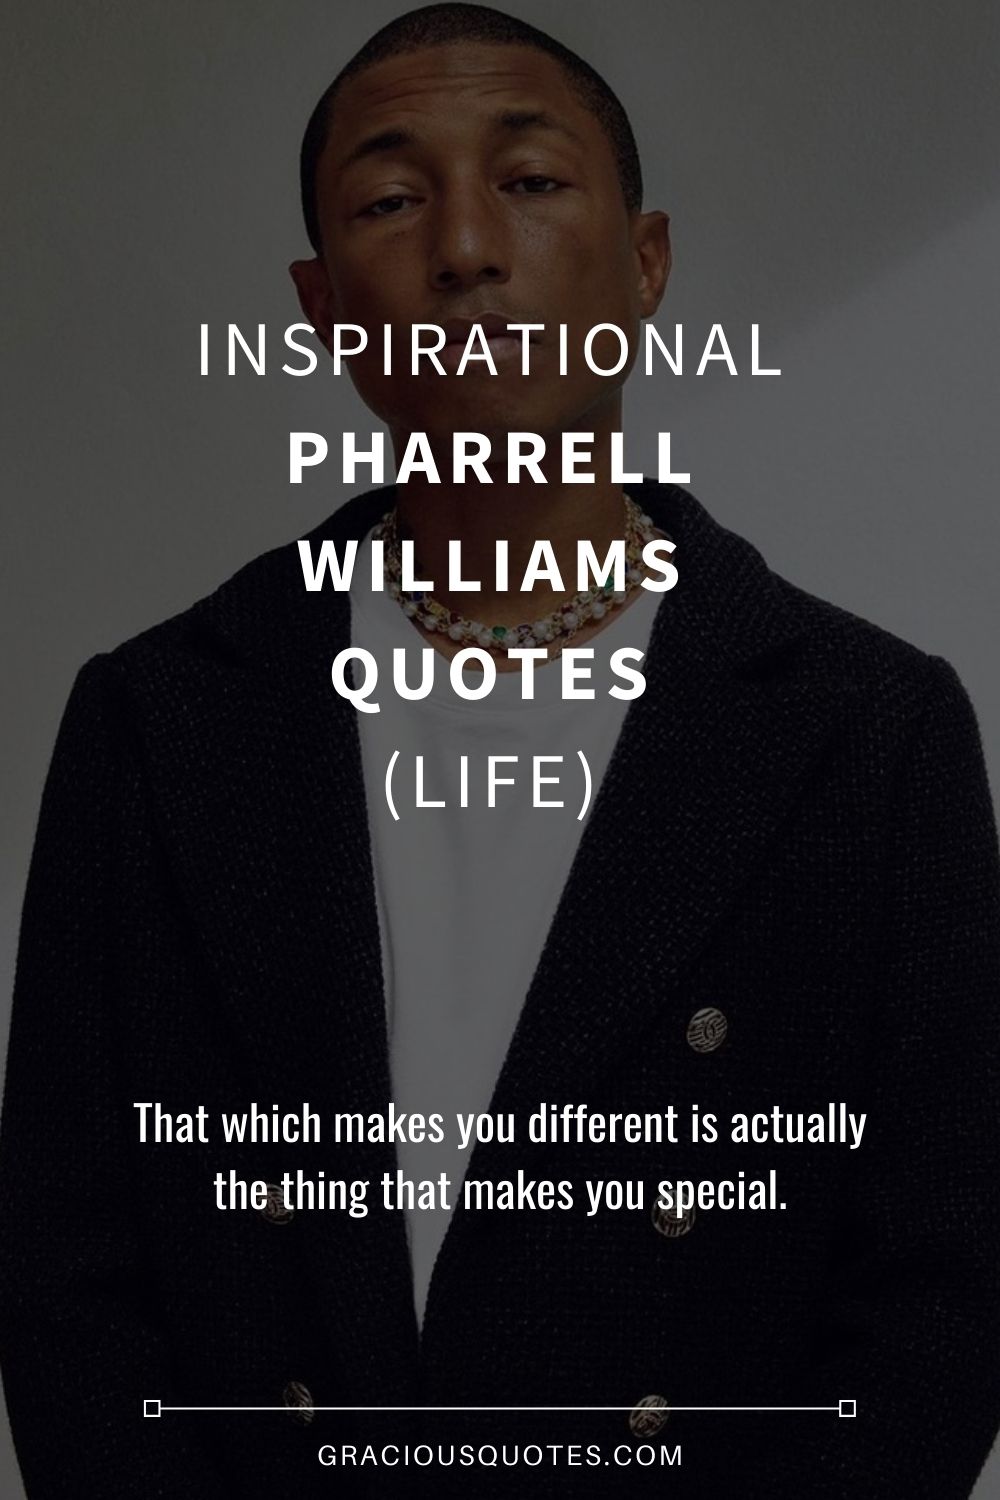 Inspirational Pharrell Williams Quotes (LIFE) - Gracious Quotes